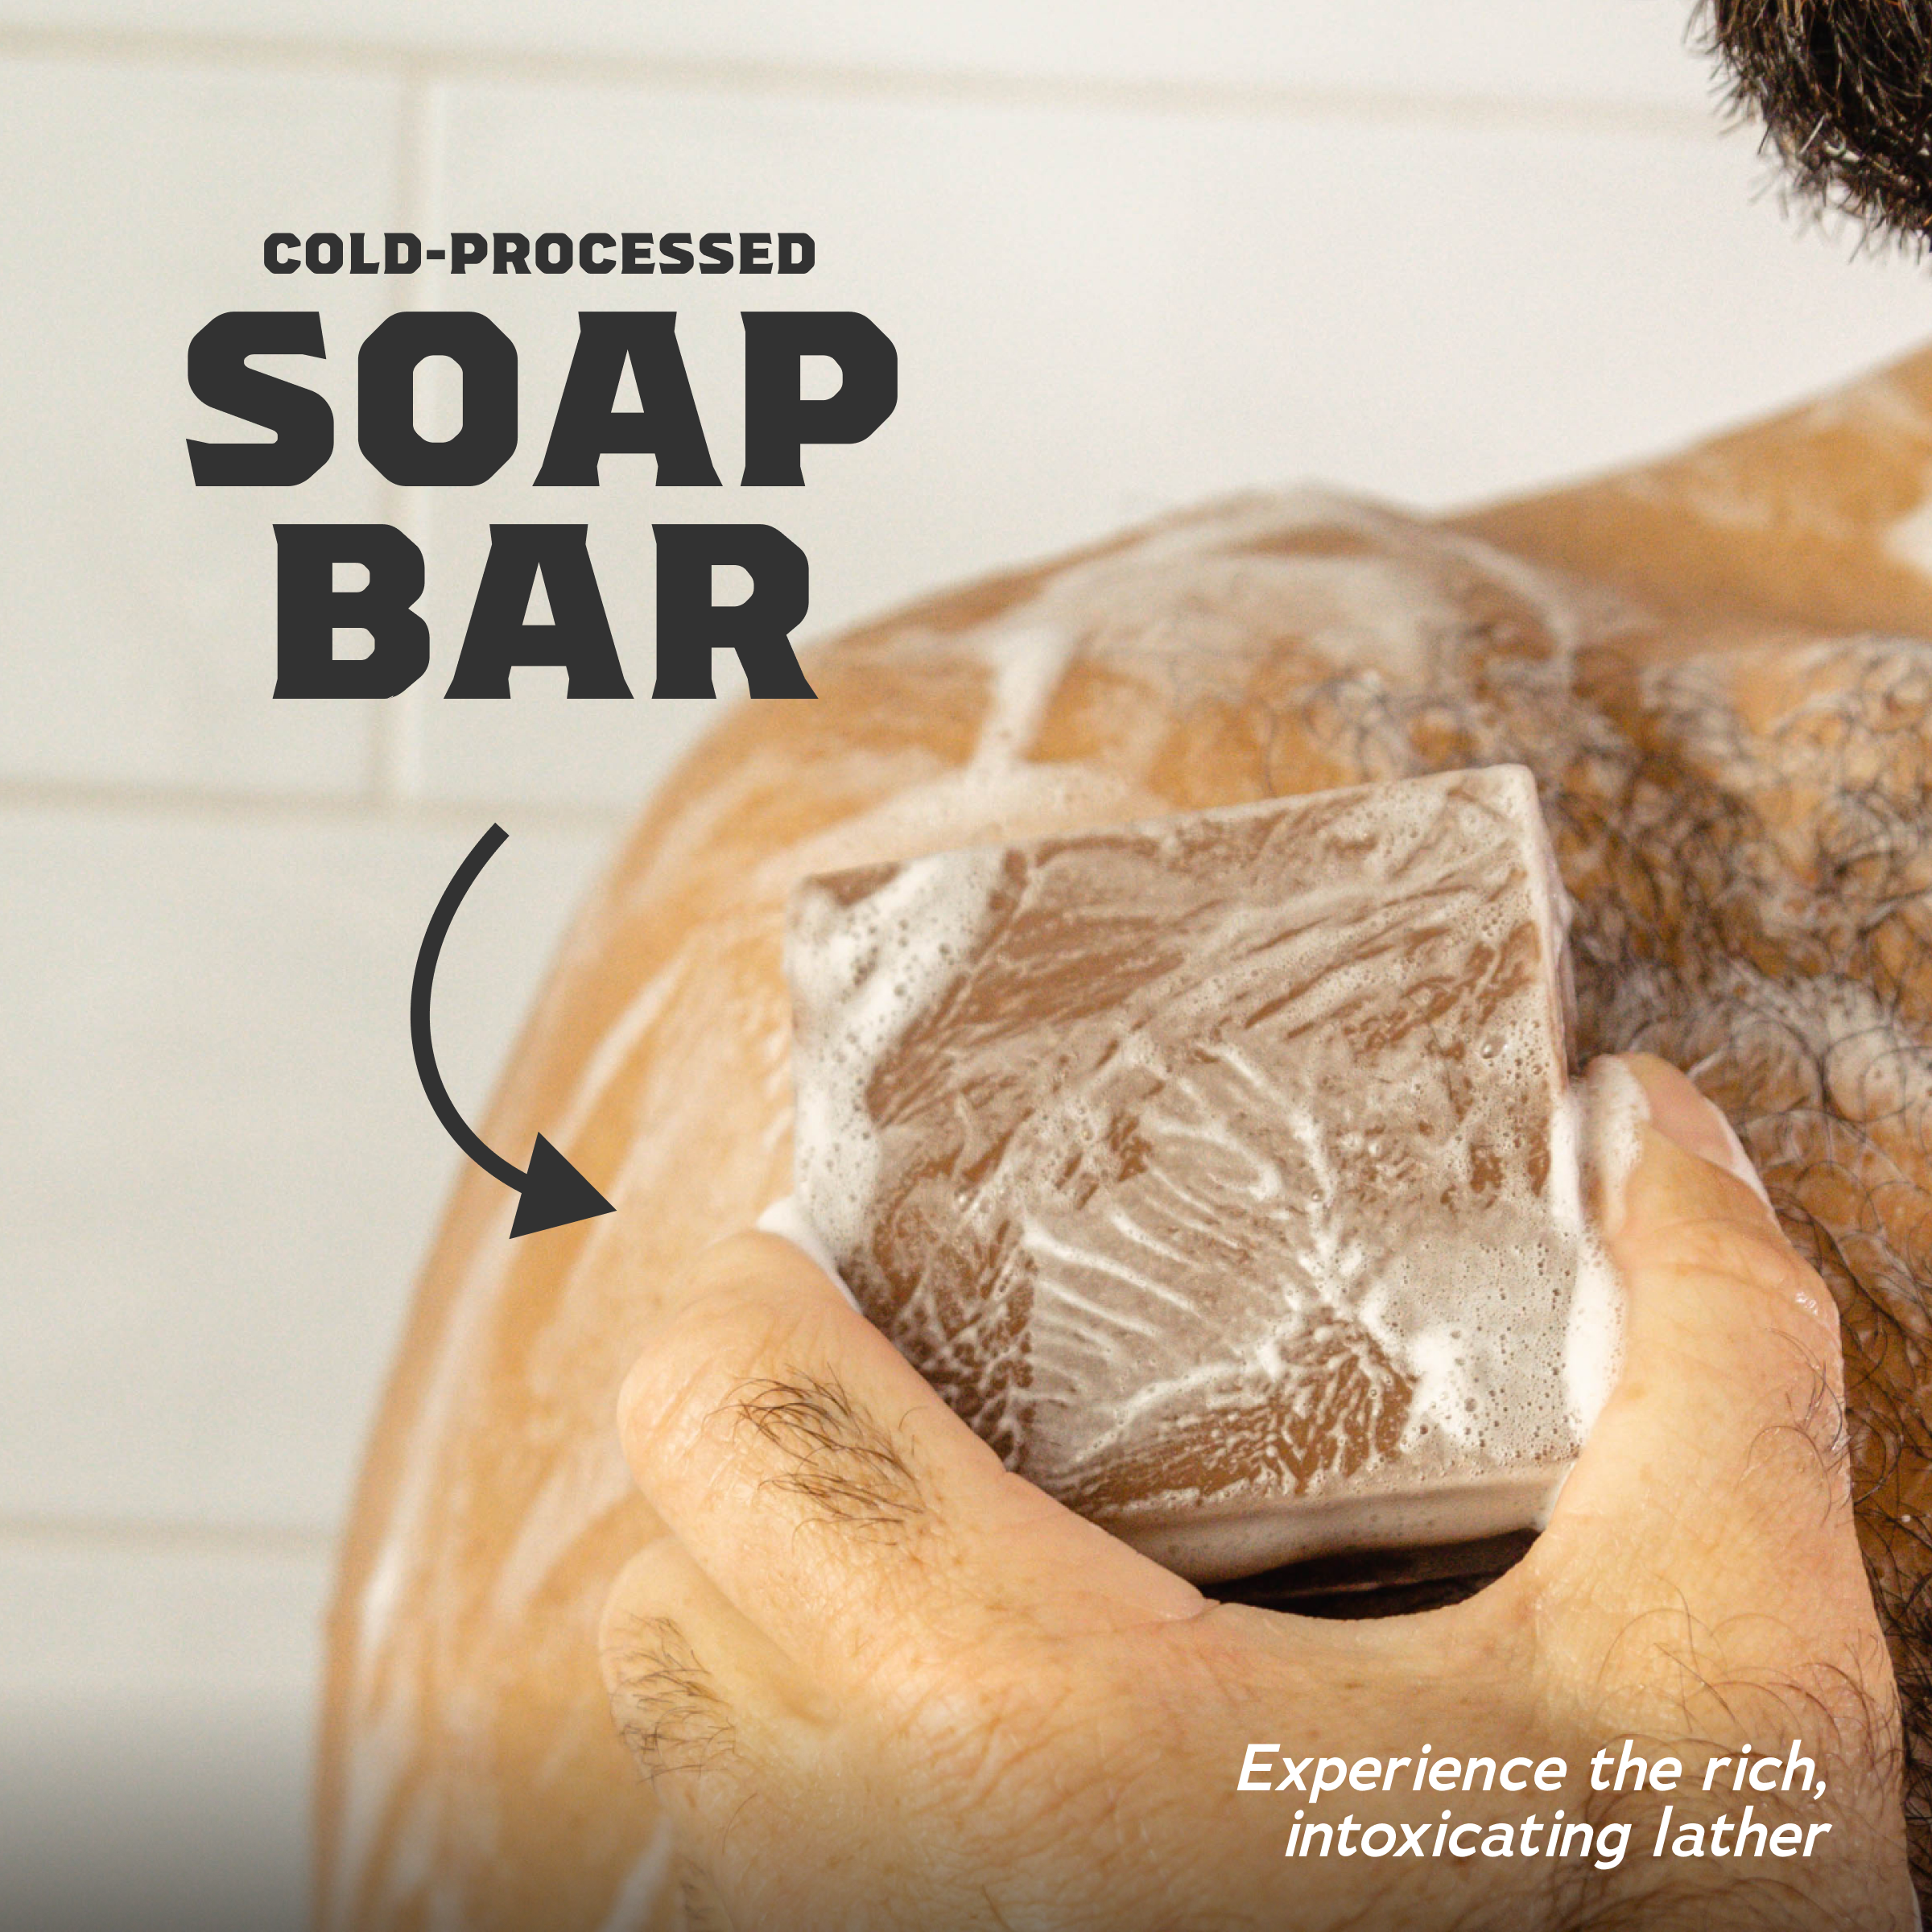 Dr. Squatch Bar Soap — simplified